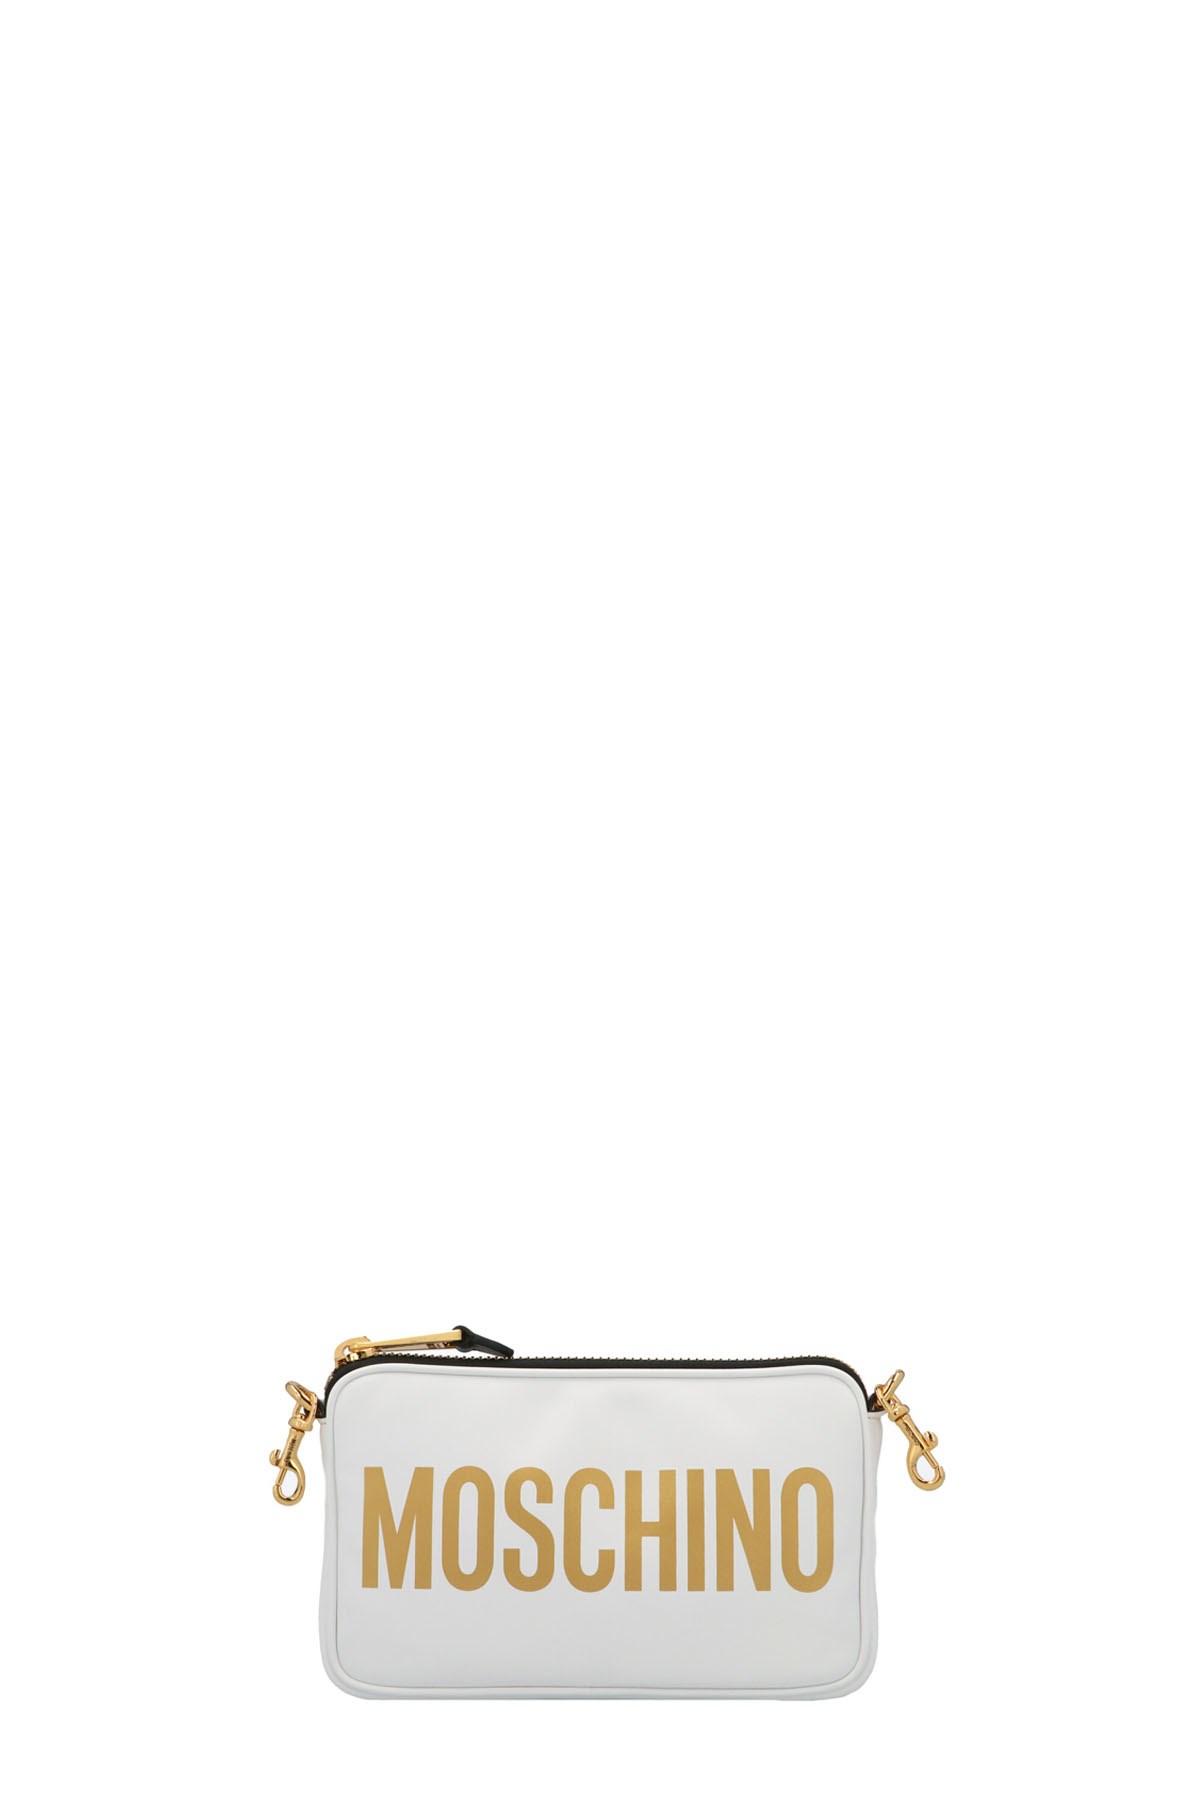 MOSCHINO Logo Print Crossbody Bag